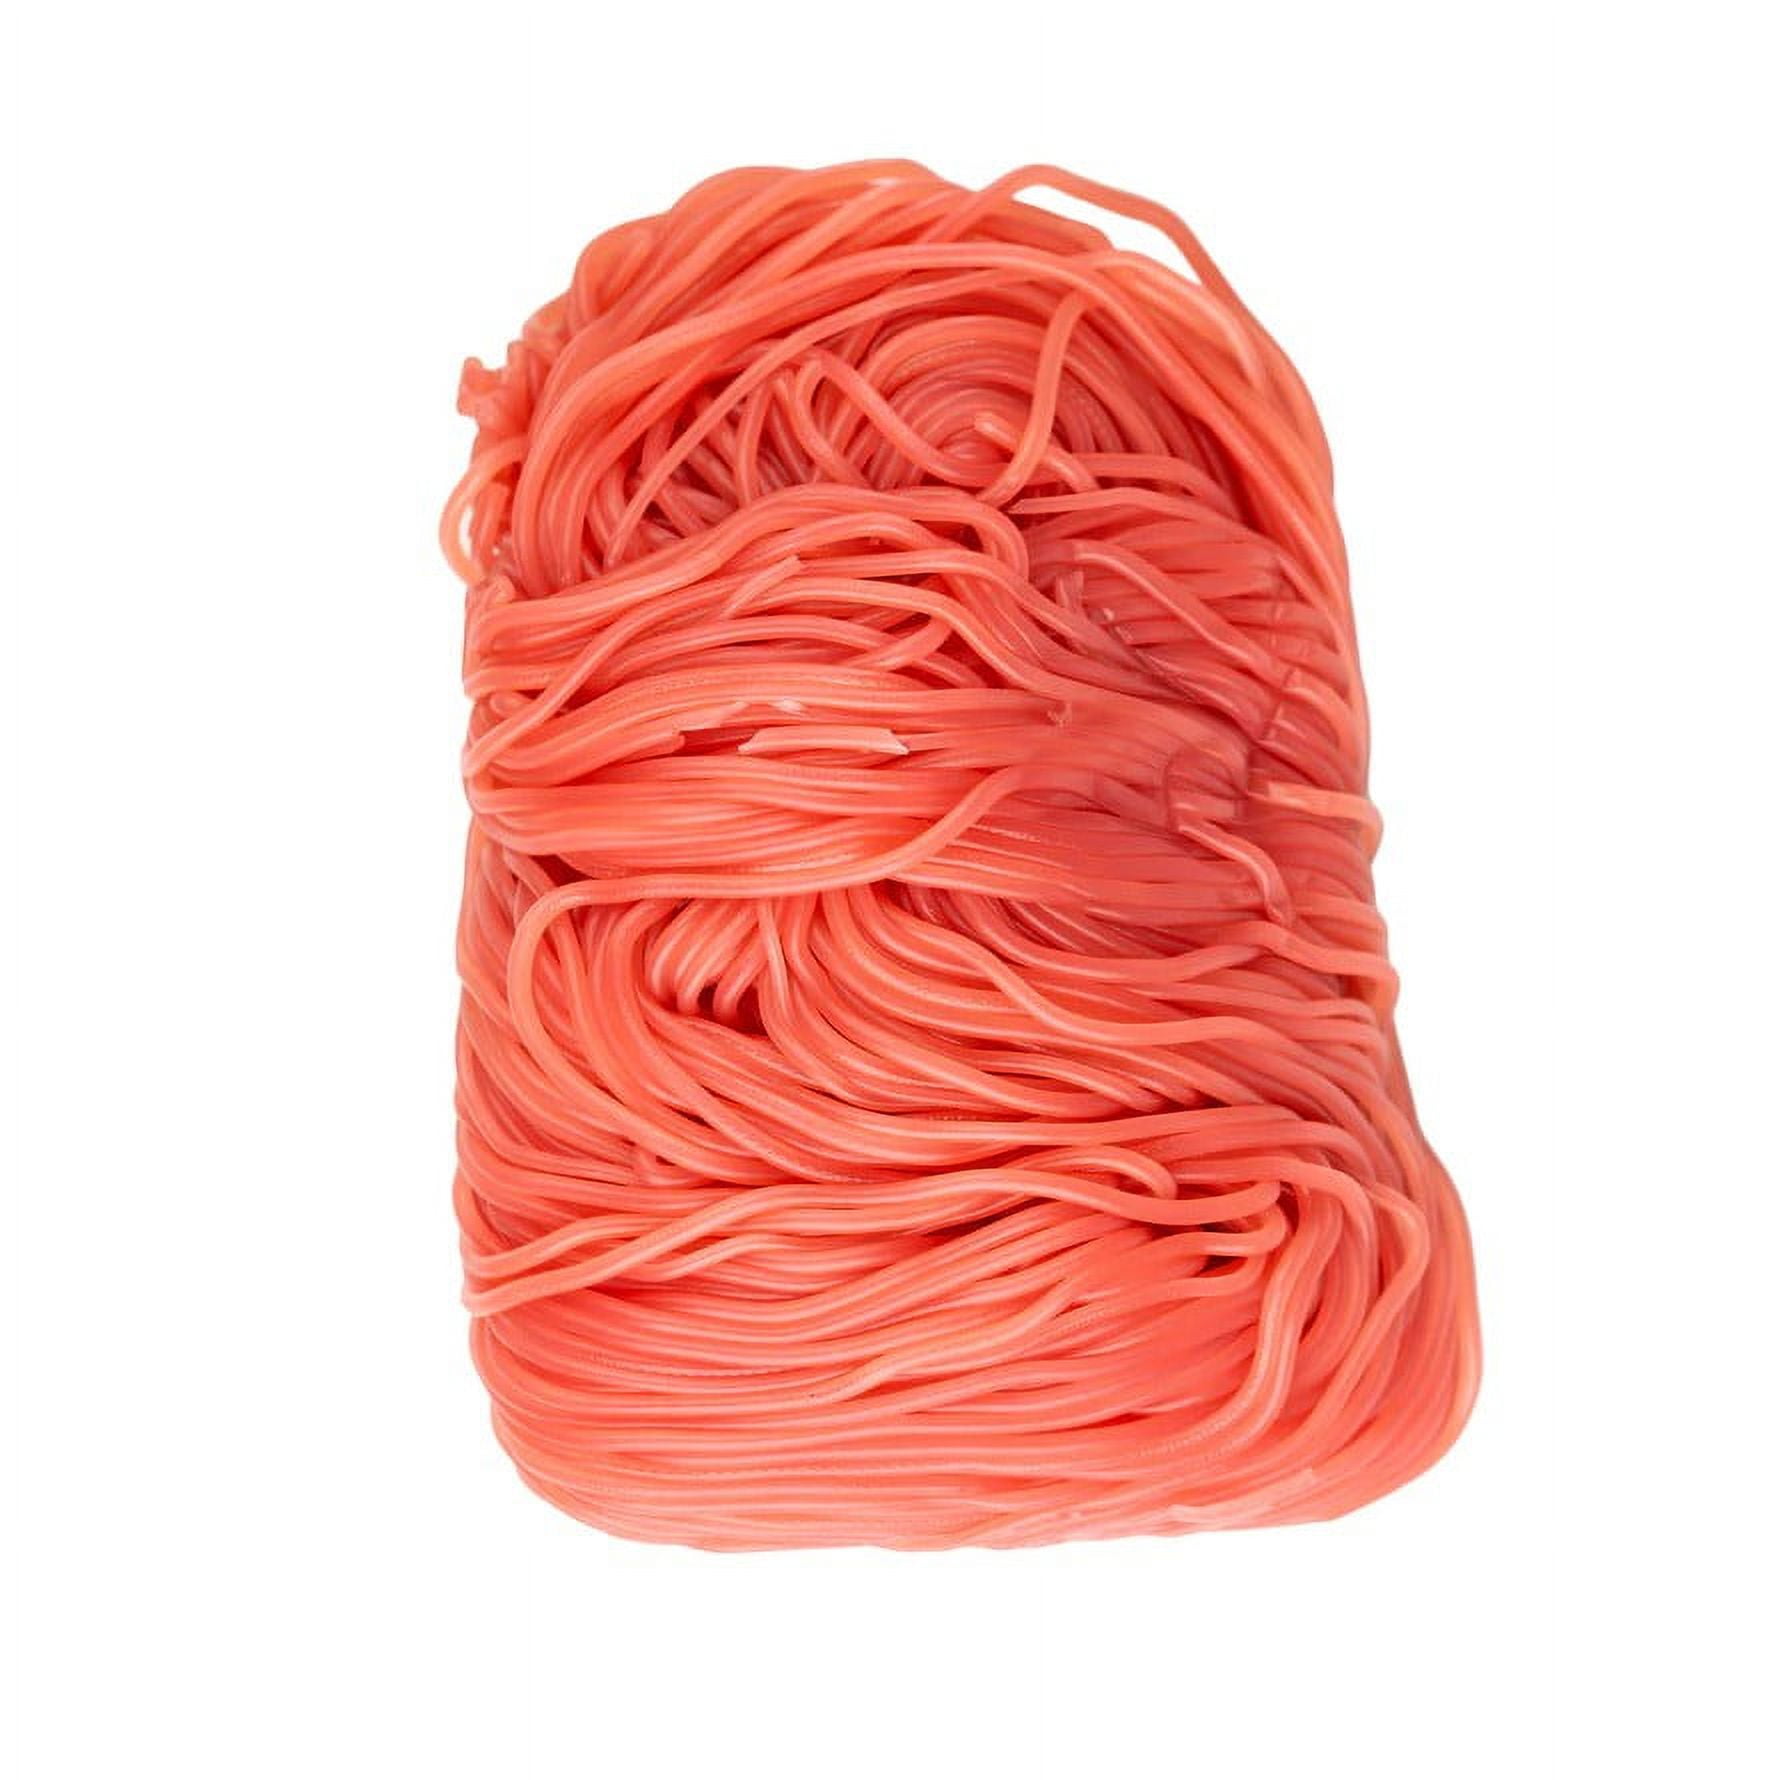 Gustaf's Cotton Candy Licorice Laces 2 lb. Bag 